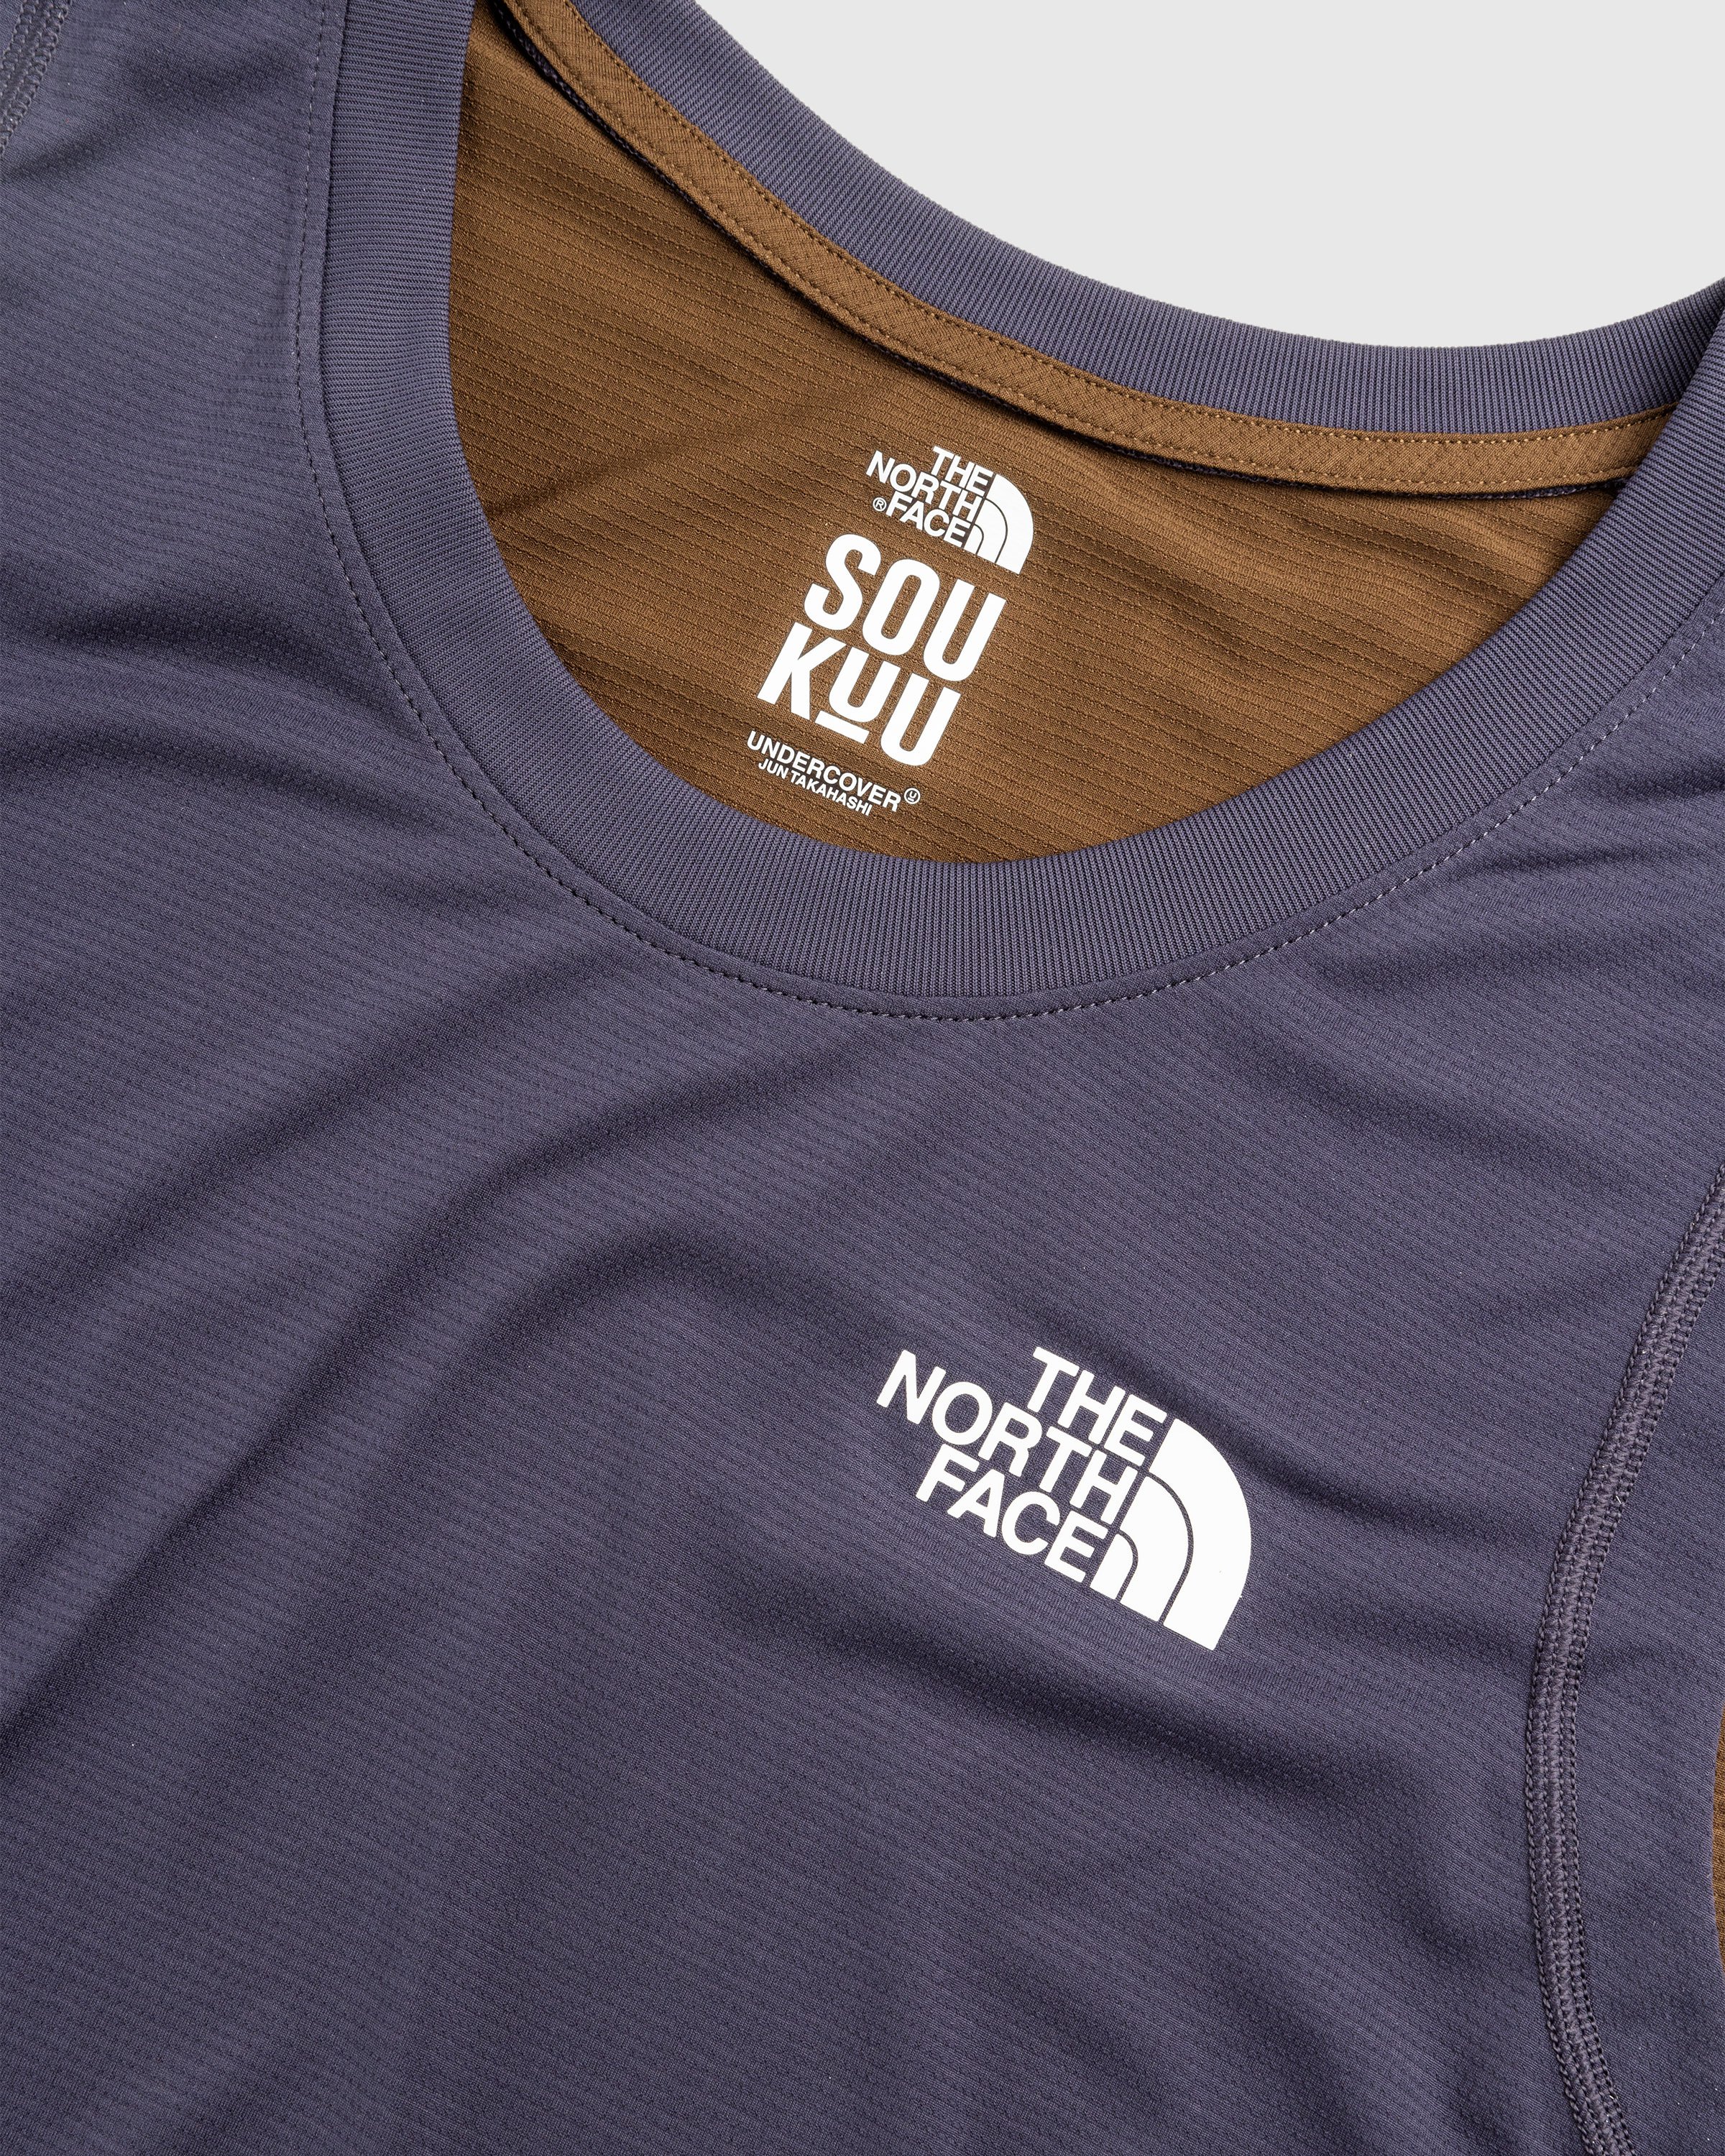 The North Face x UNDERCOVER - SOUKUU TRAIL RUN TANK TOP PERISCOPE GREY/DARK EAR - Clothing - Grey - Image 6